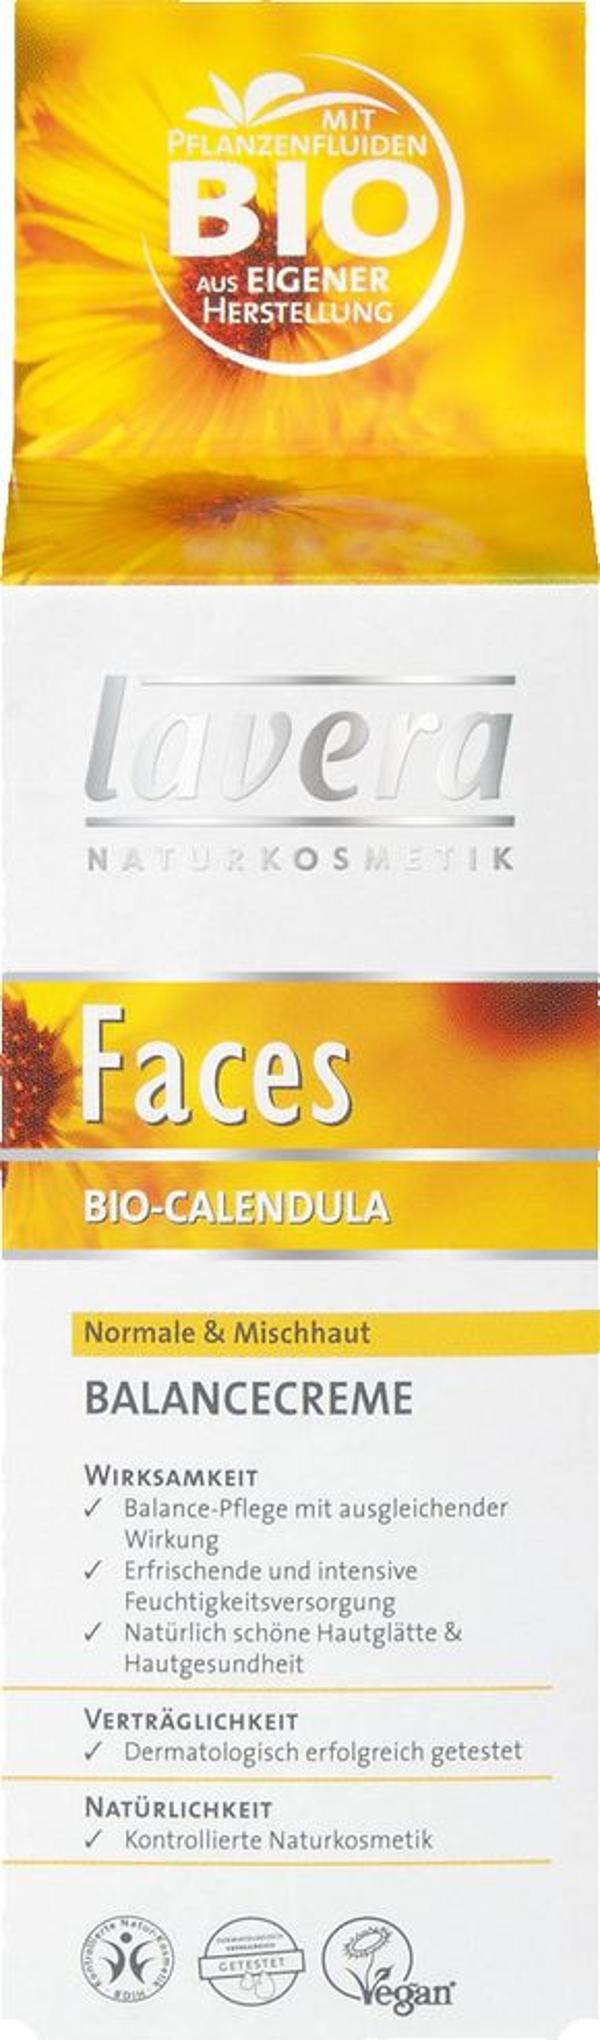 Produktfoto zu Balancecreme Bio-Calendula 50 ml lavera